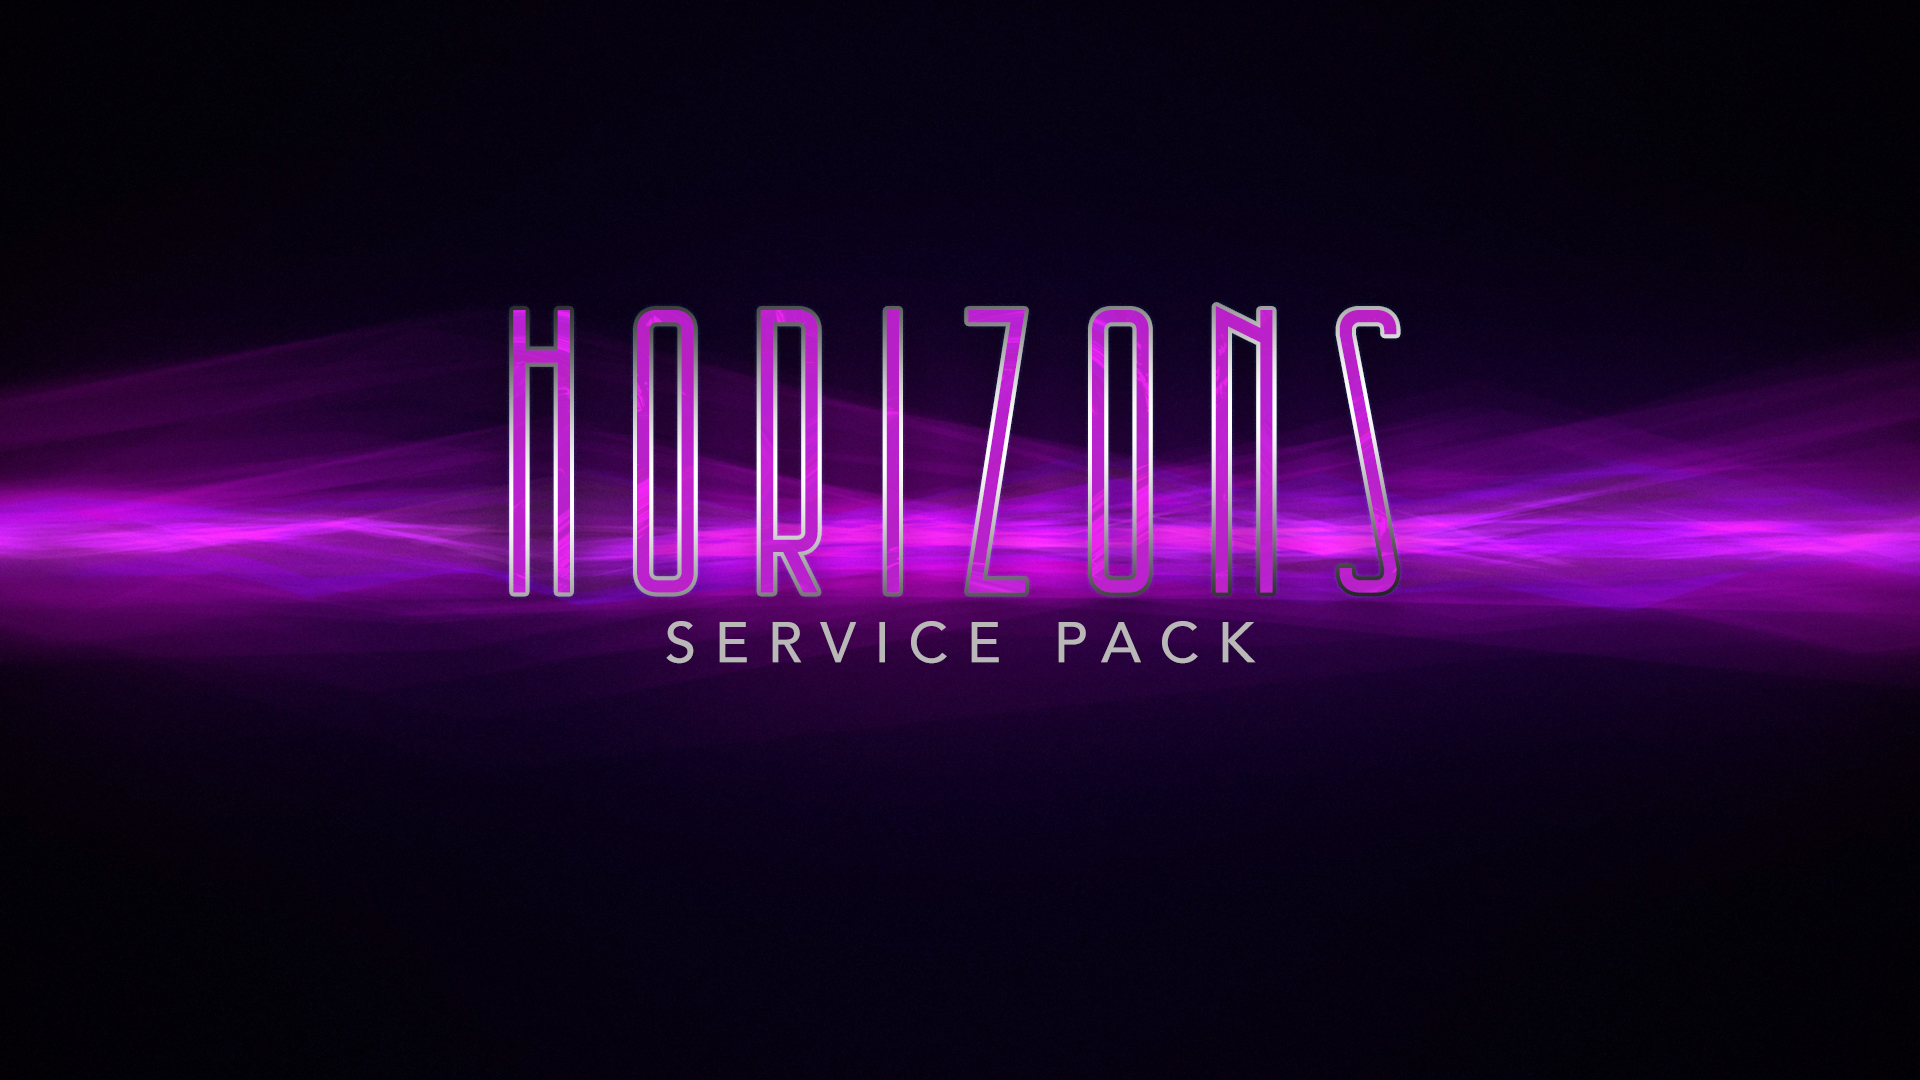 Horizons Service Pack